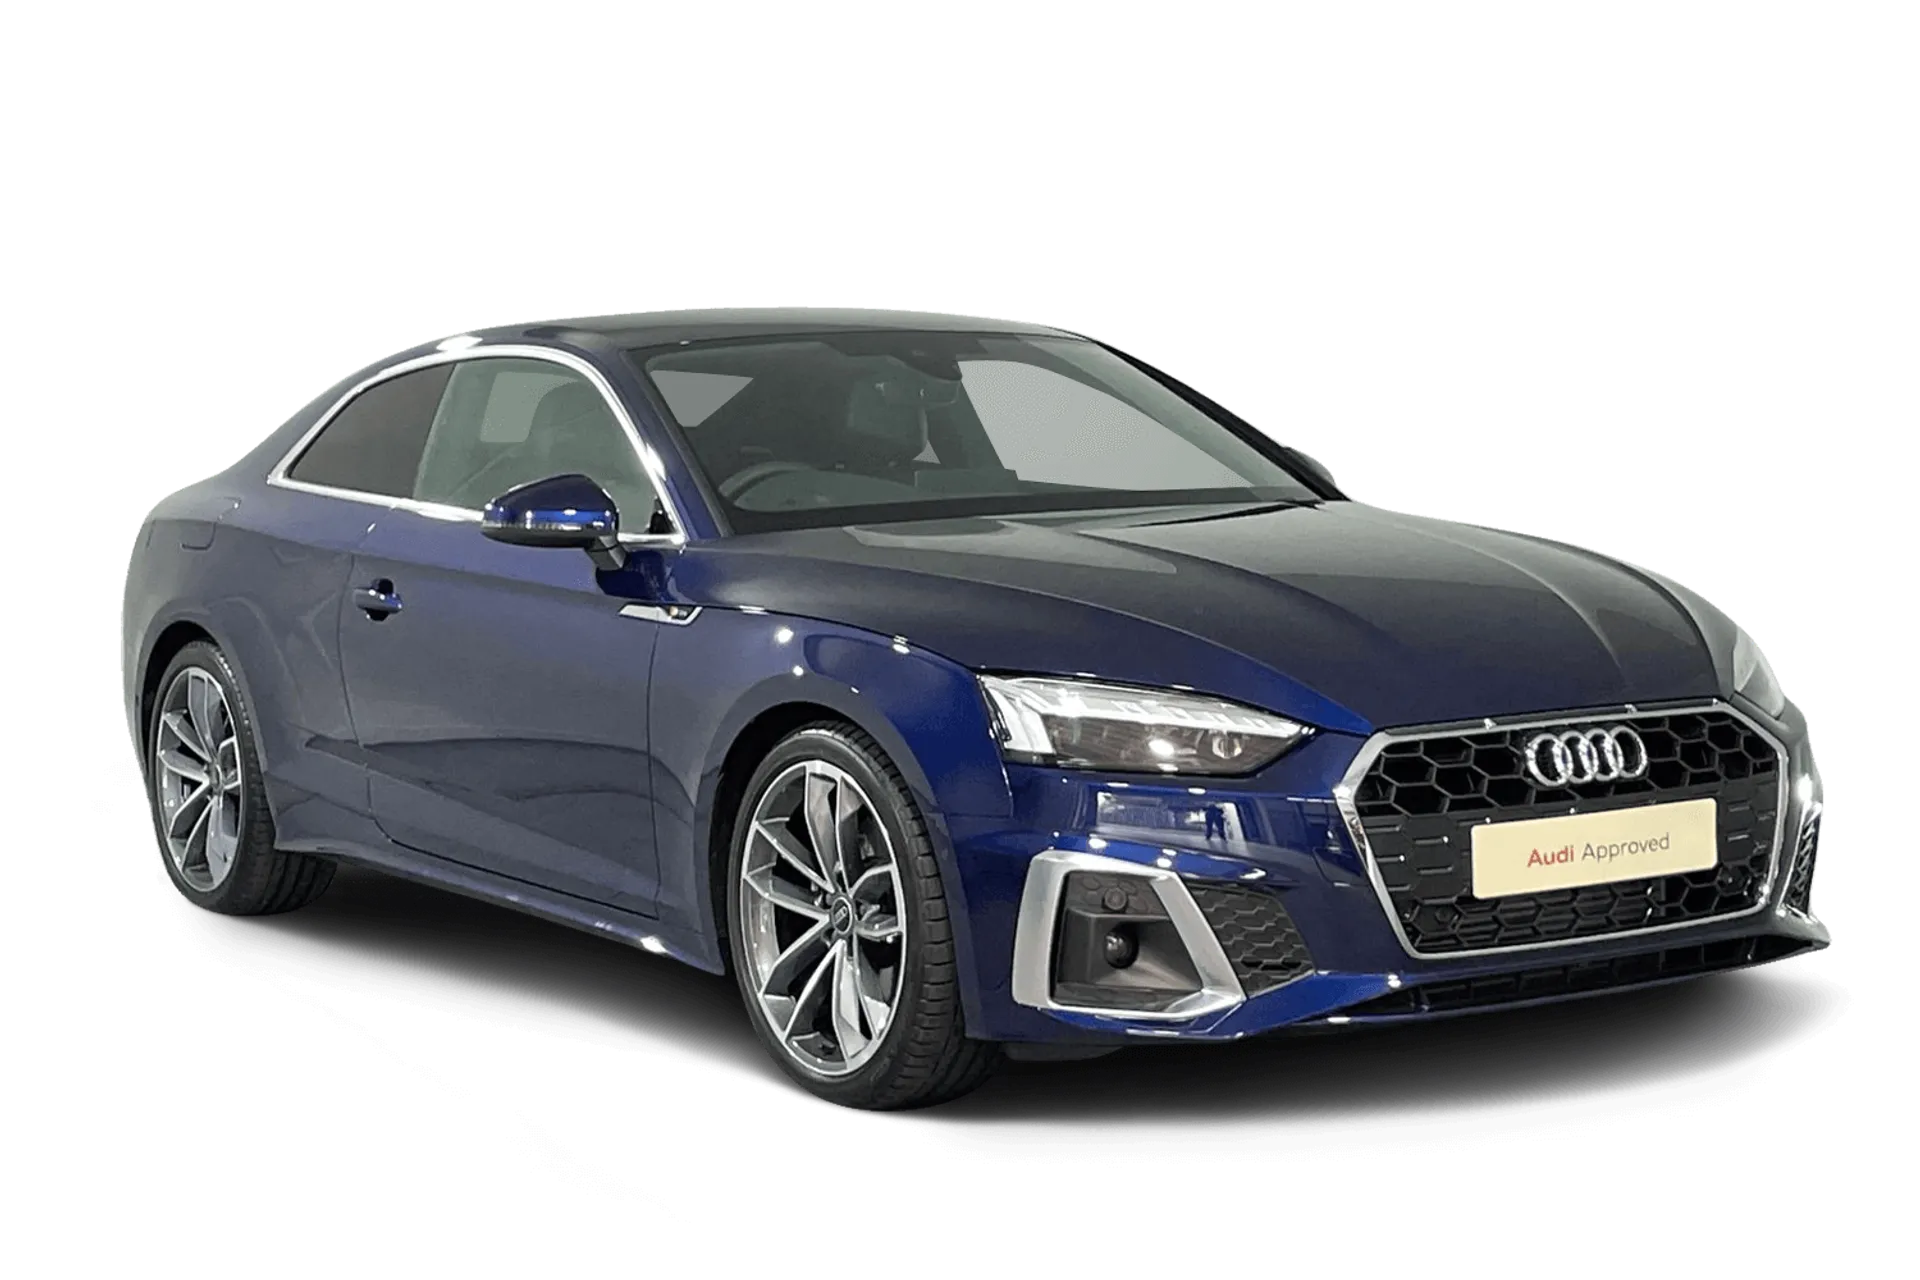 Audi A5 focused image